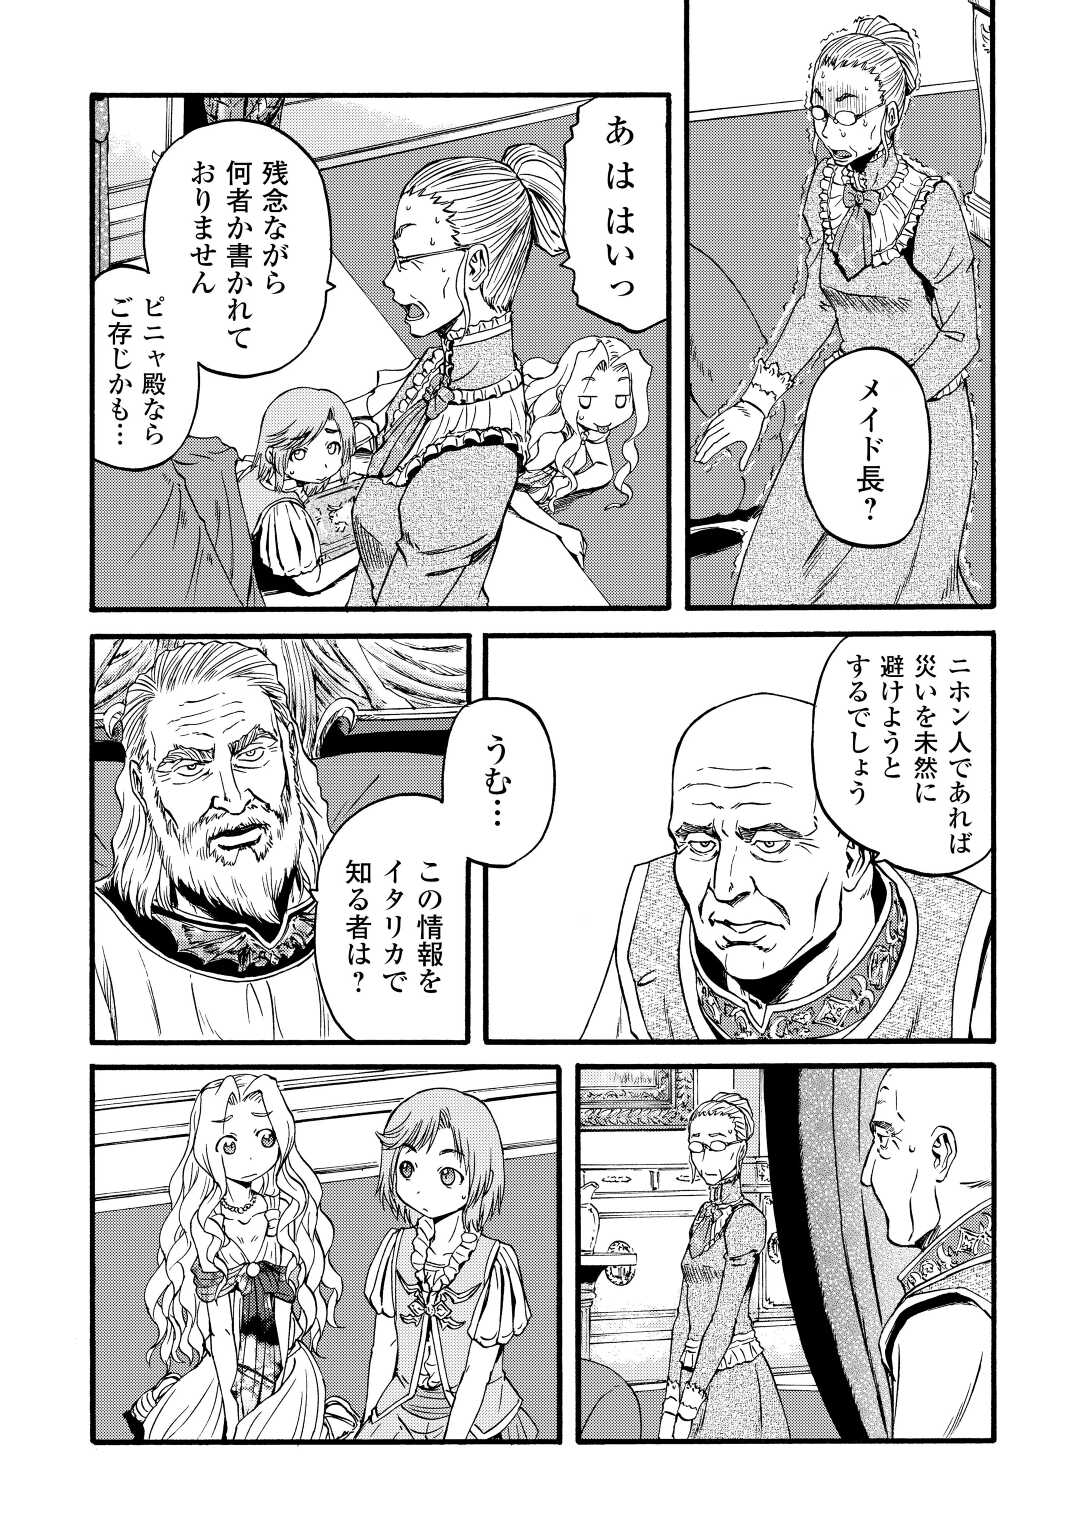 Comic: GATE: Jieitai Kano Chi nite, Kaku Tatakaeri 10 (Japan(GATE -  Alphapolis comics (GJA)) Col:JP-GJA-10